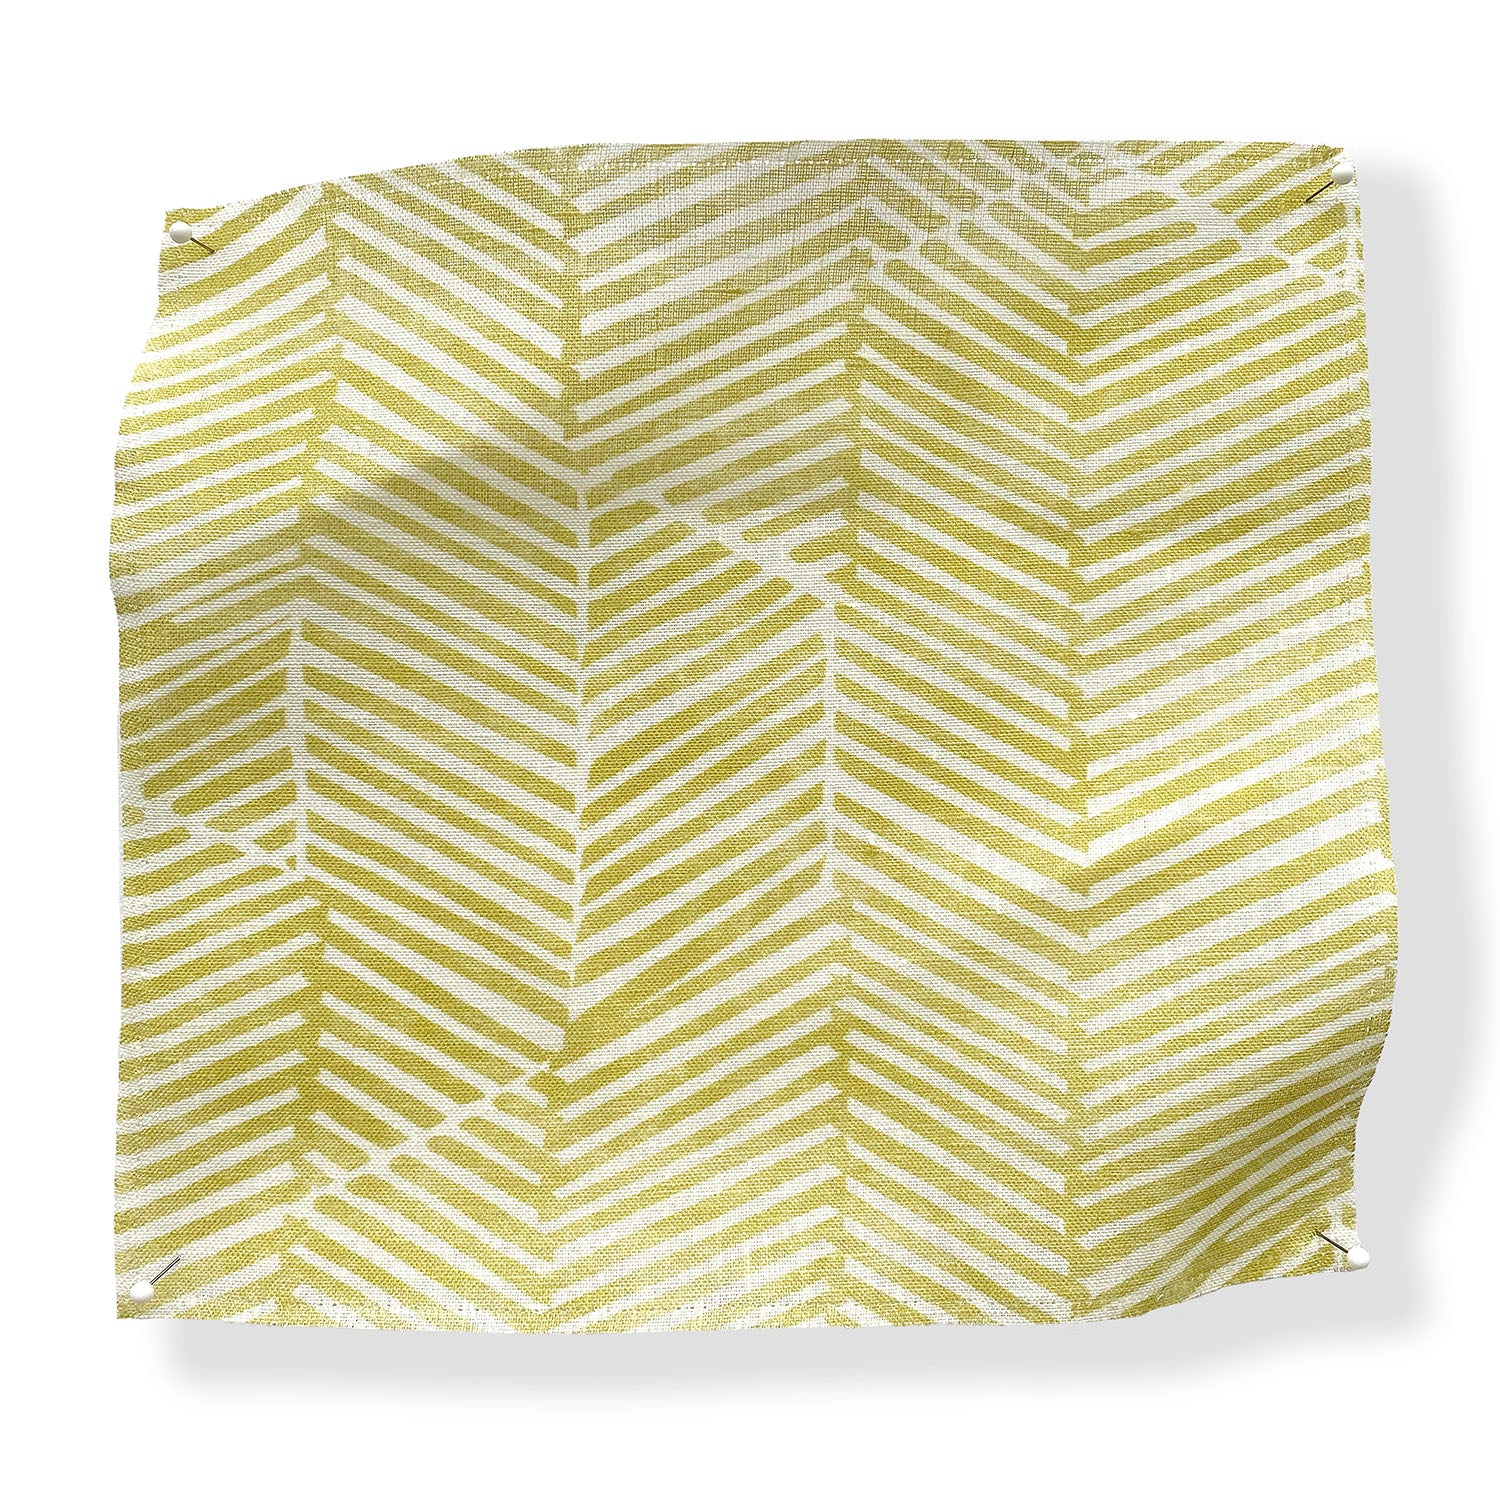 Square fabric swatch in a dense herringbone print in mustard on a white field.